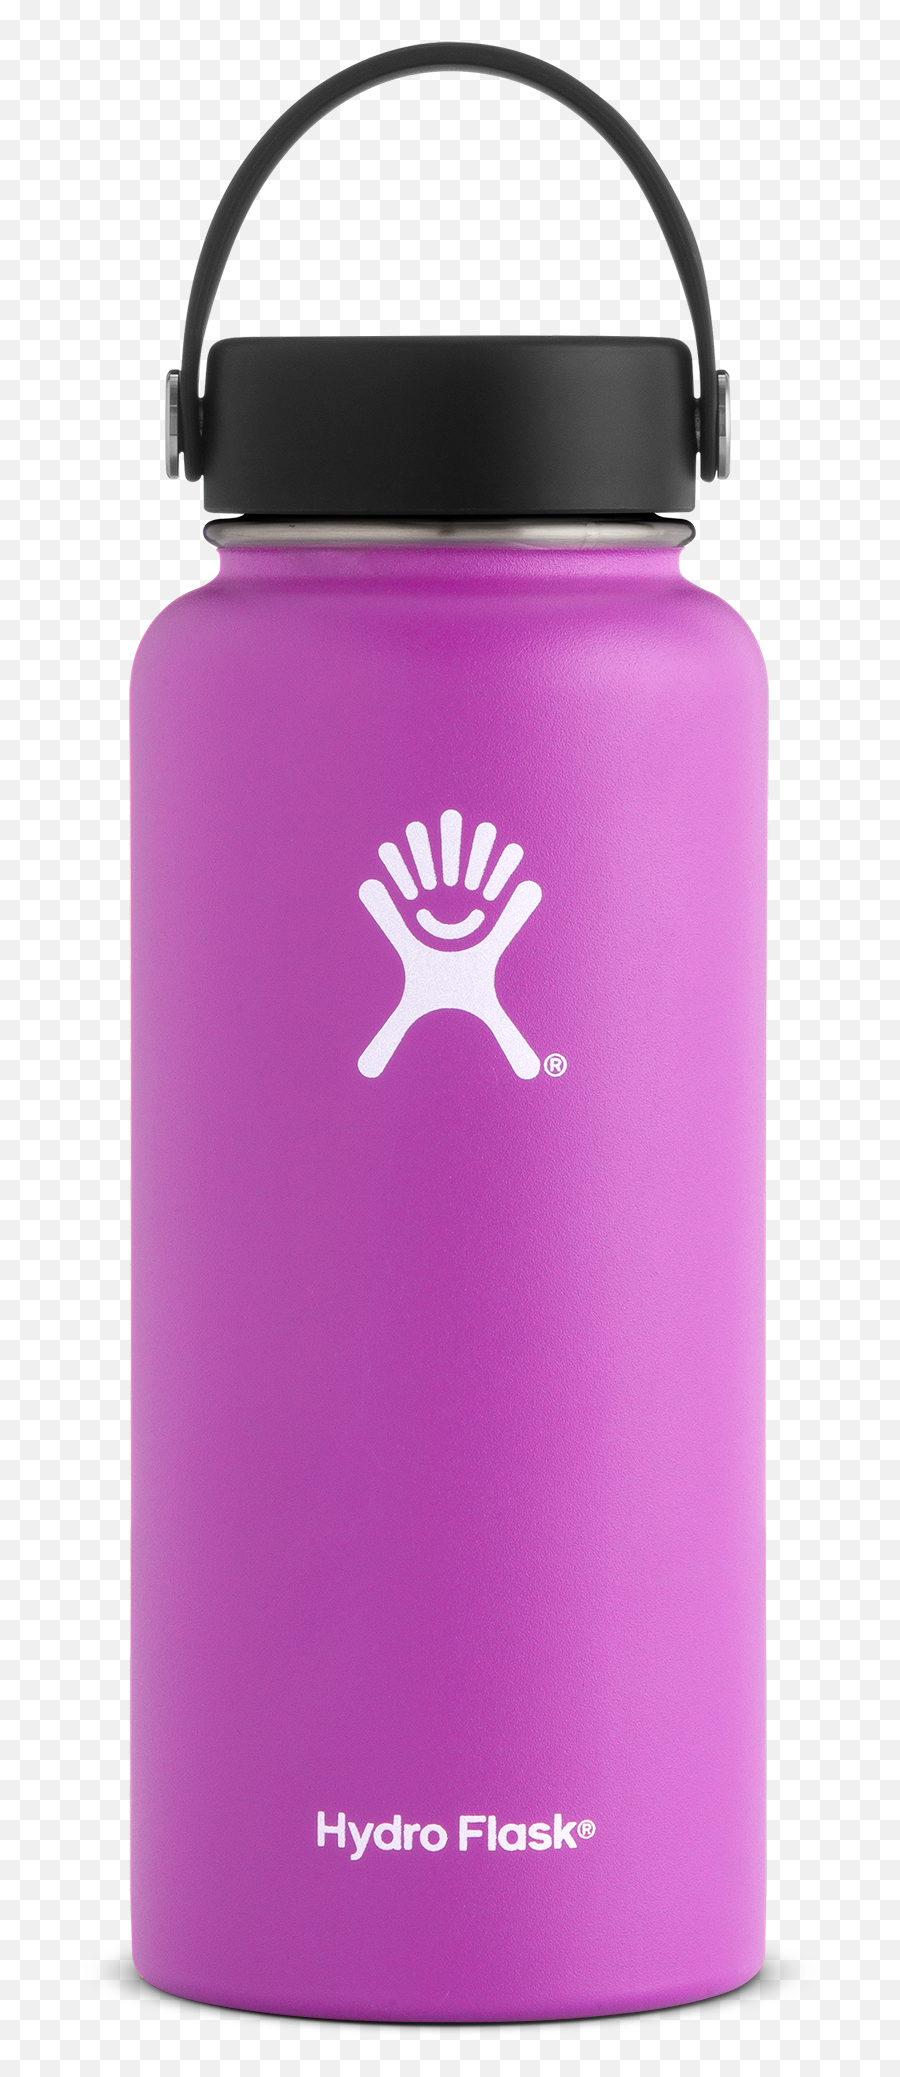 Hydro Flask - Grind Online Store Emoji,Hydro Flask Png